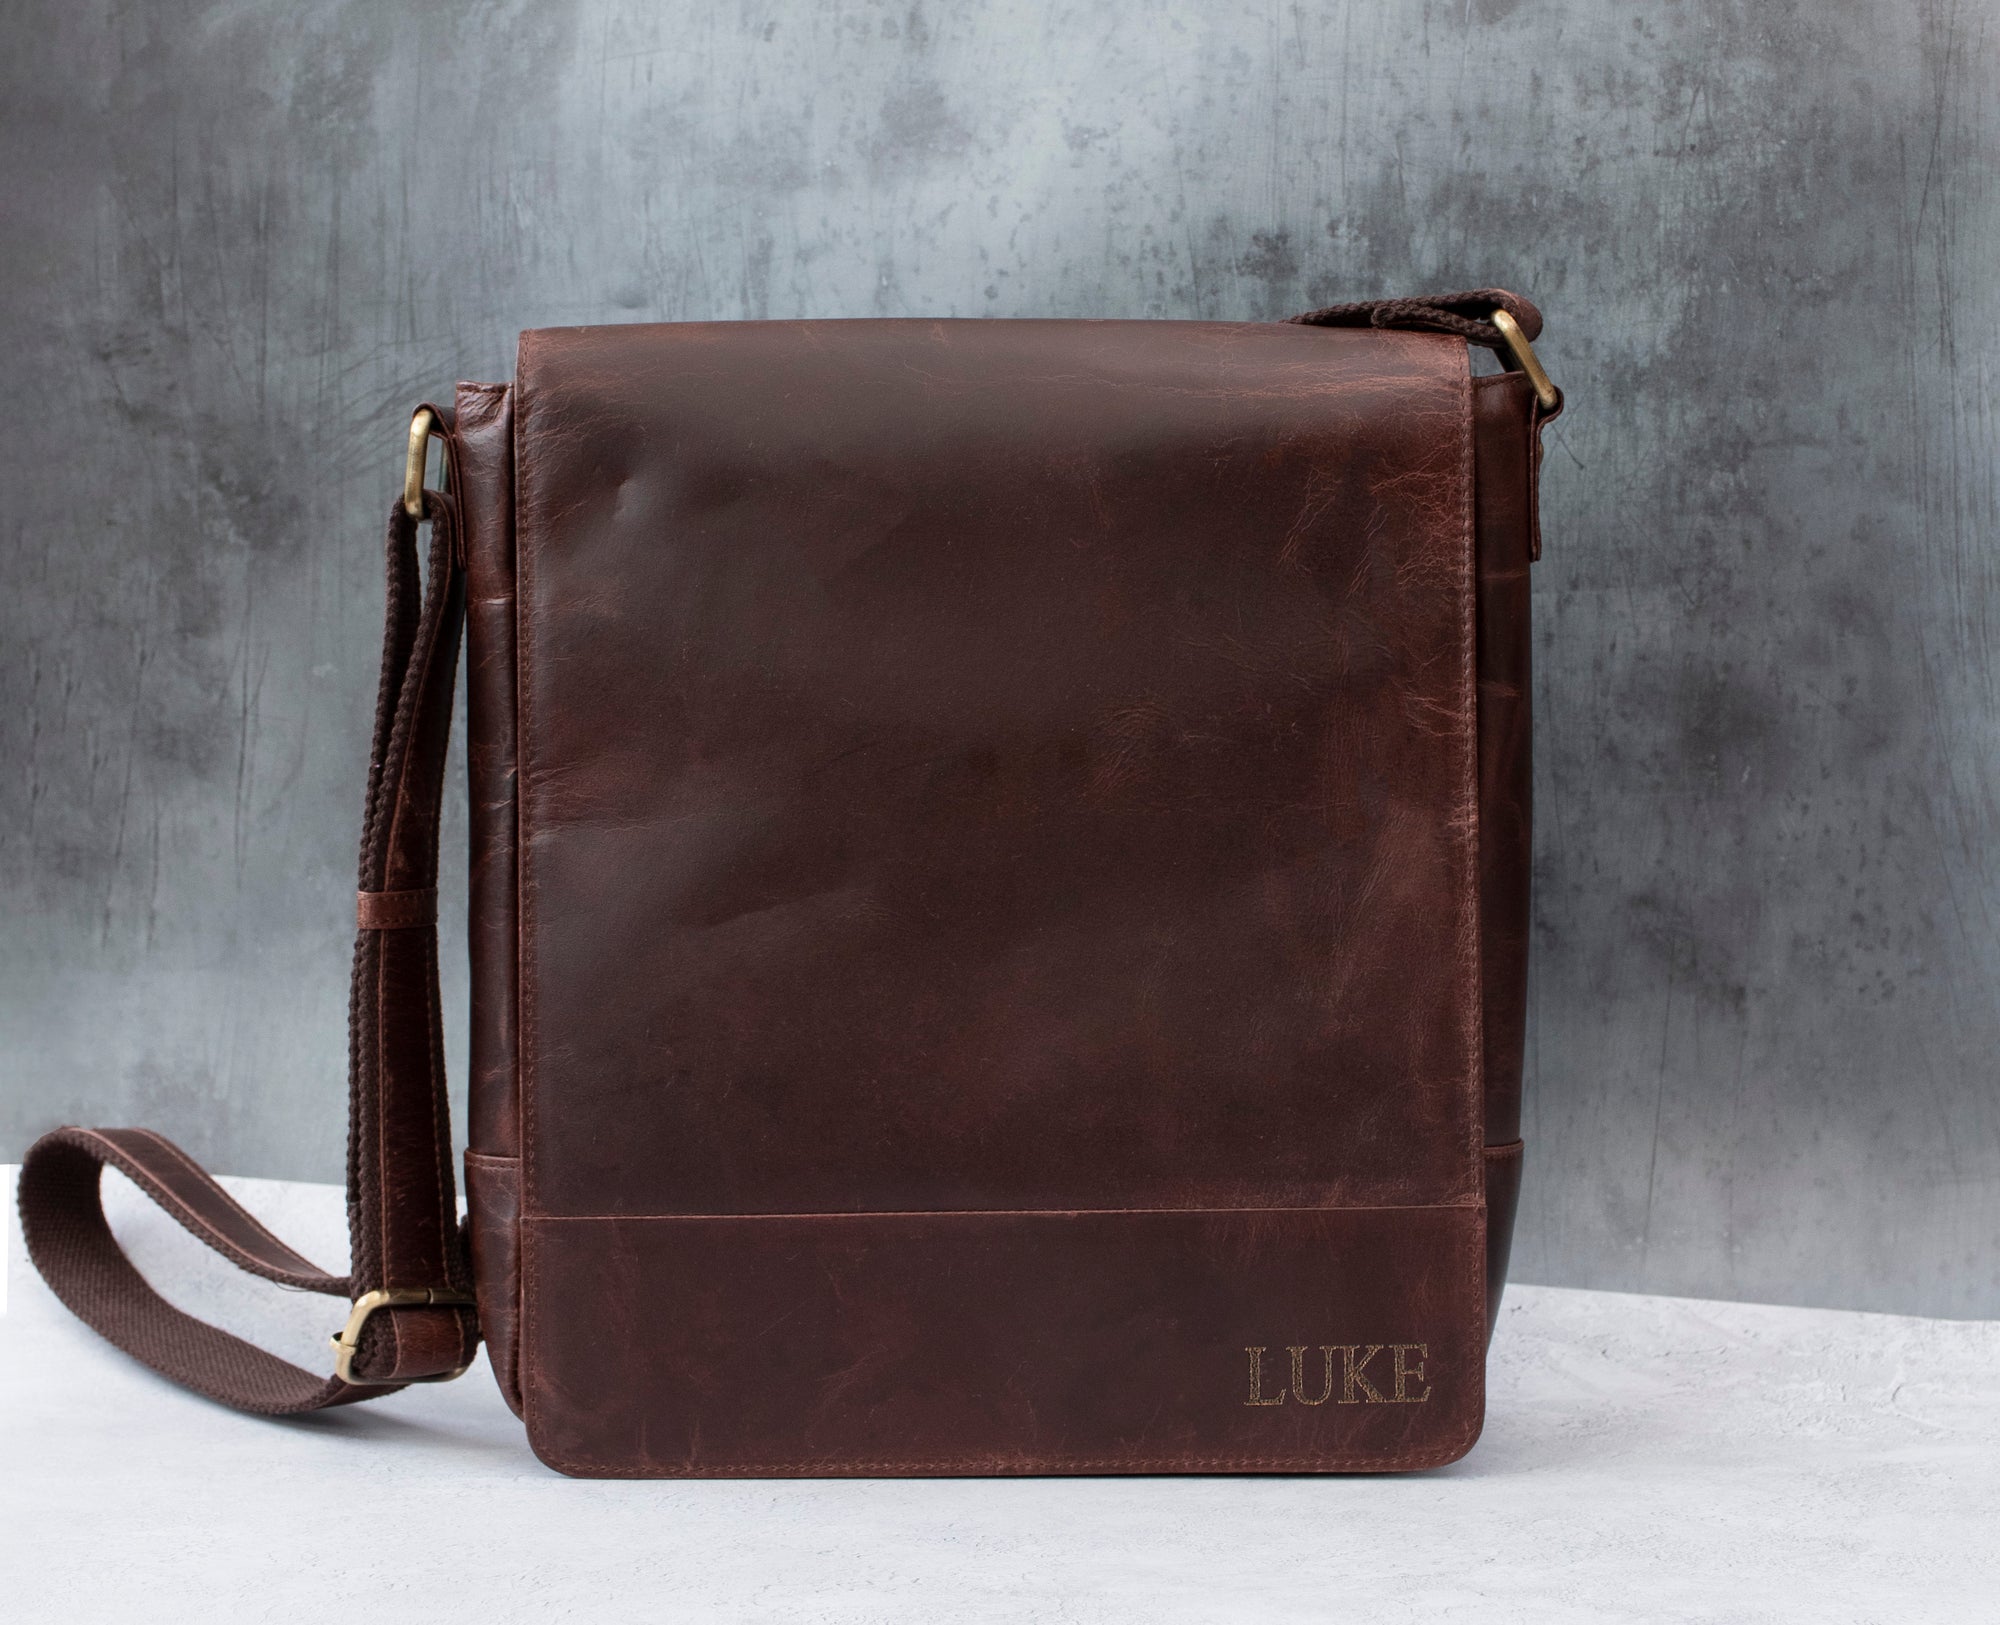 PRIMEHIDE Small Leather Messenger Bag - 1565